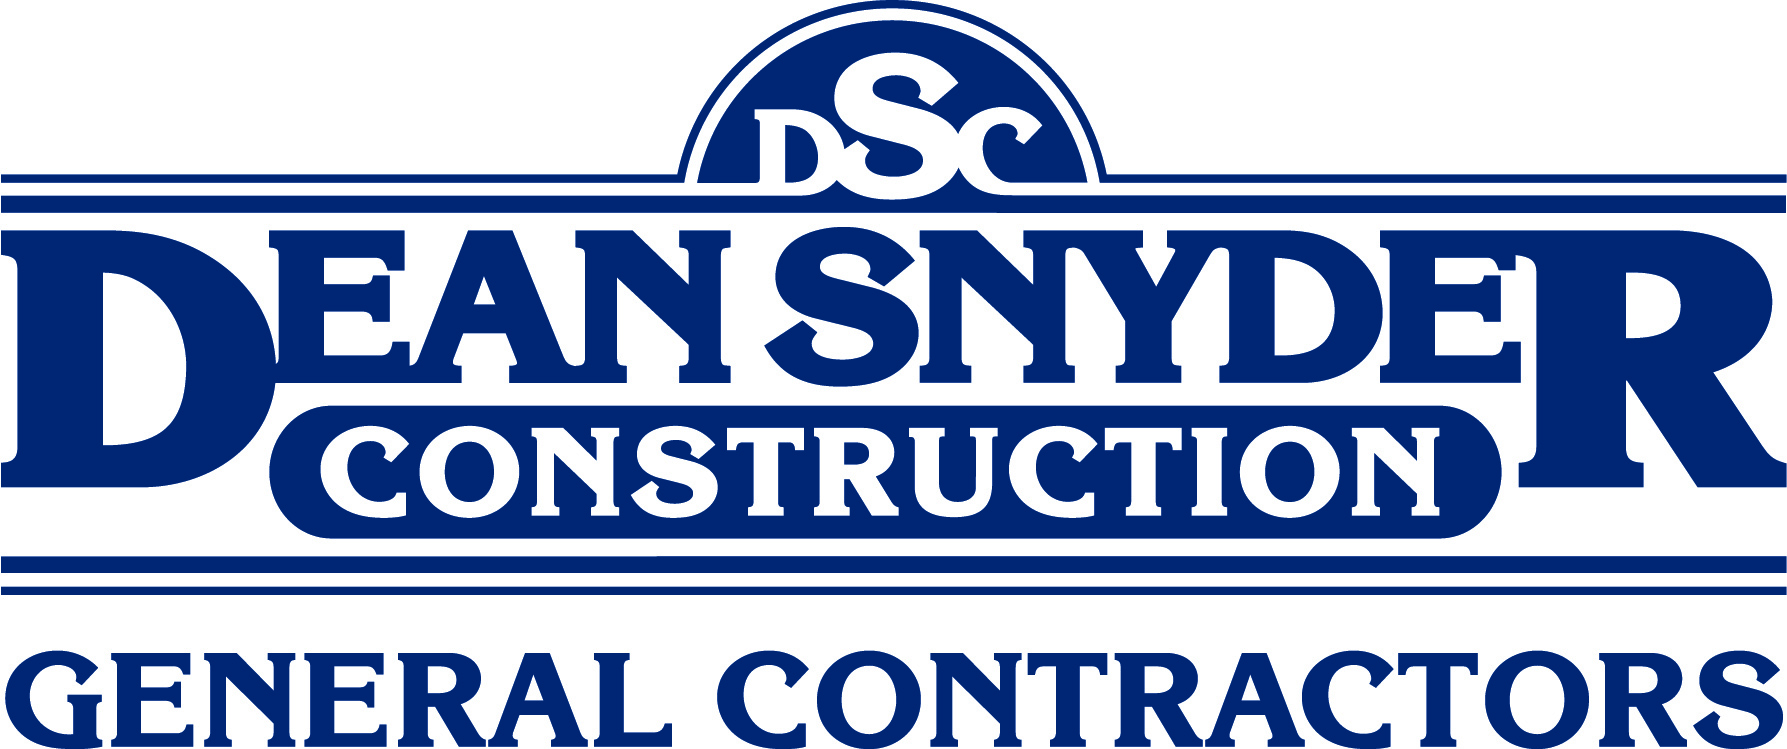 Dean Snyder Construction